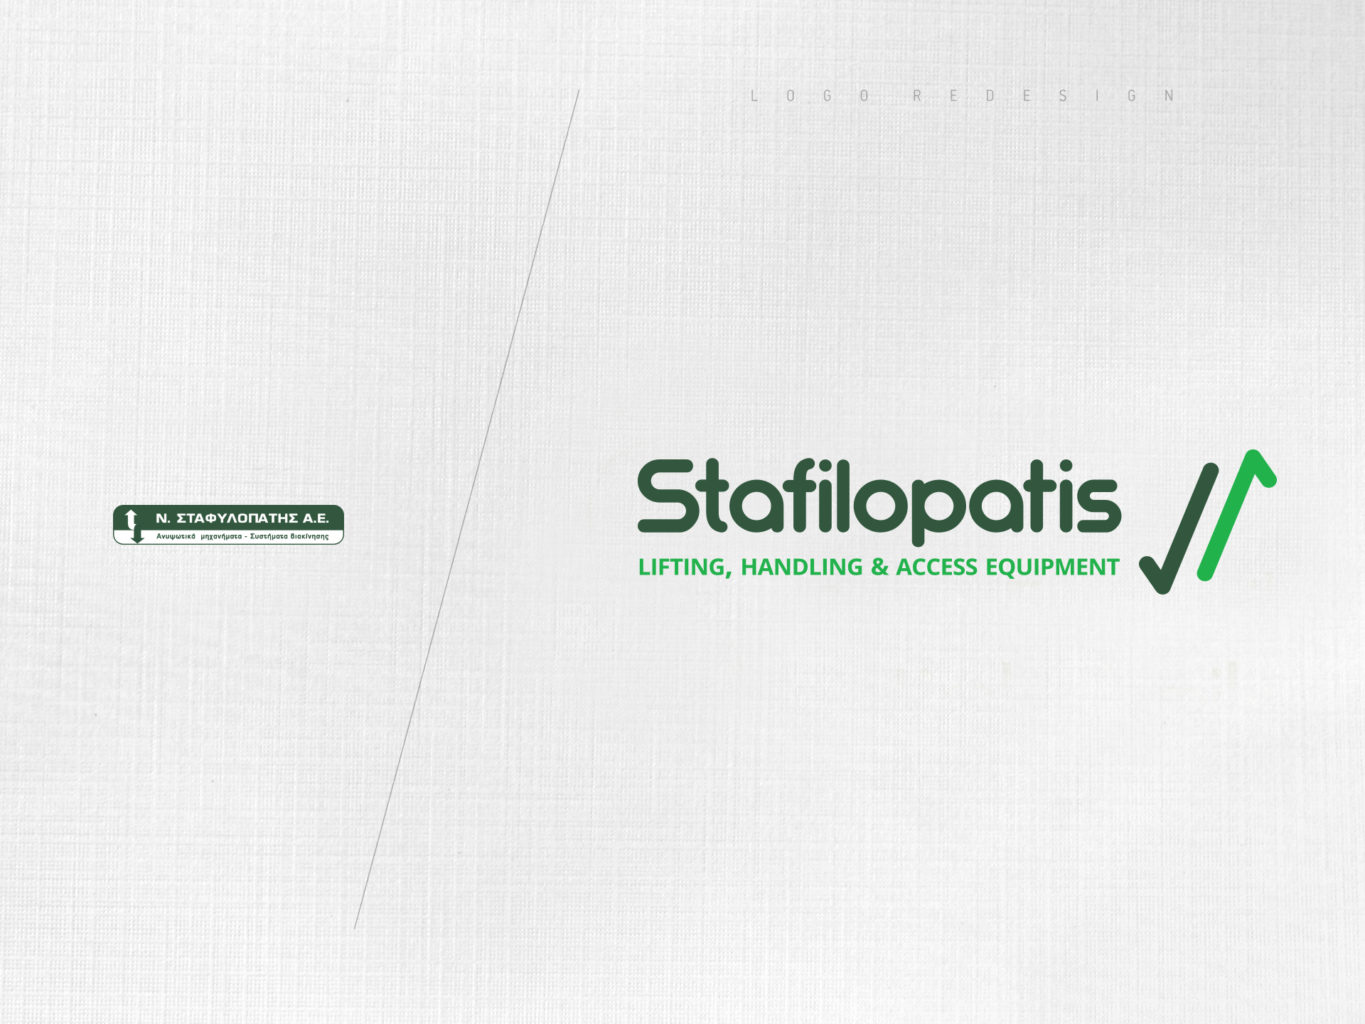 Stafilopatis lifting, handling and access equipment redesign logo